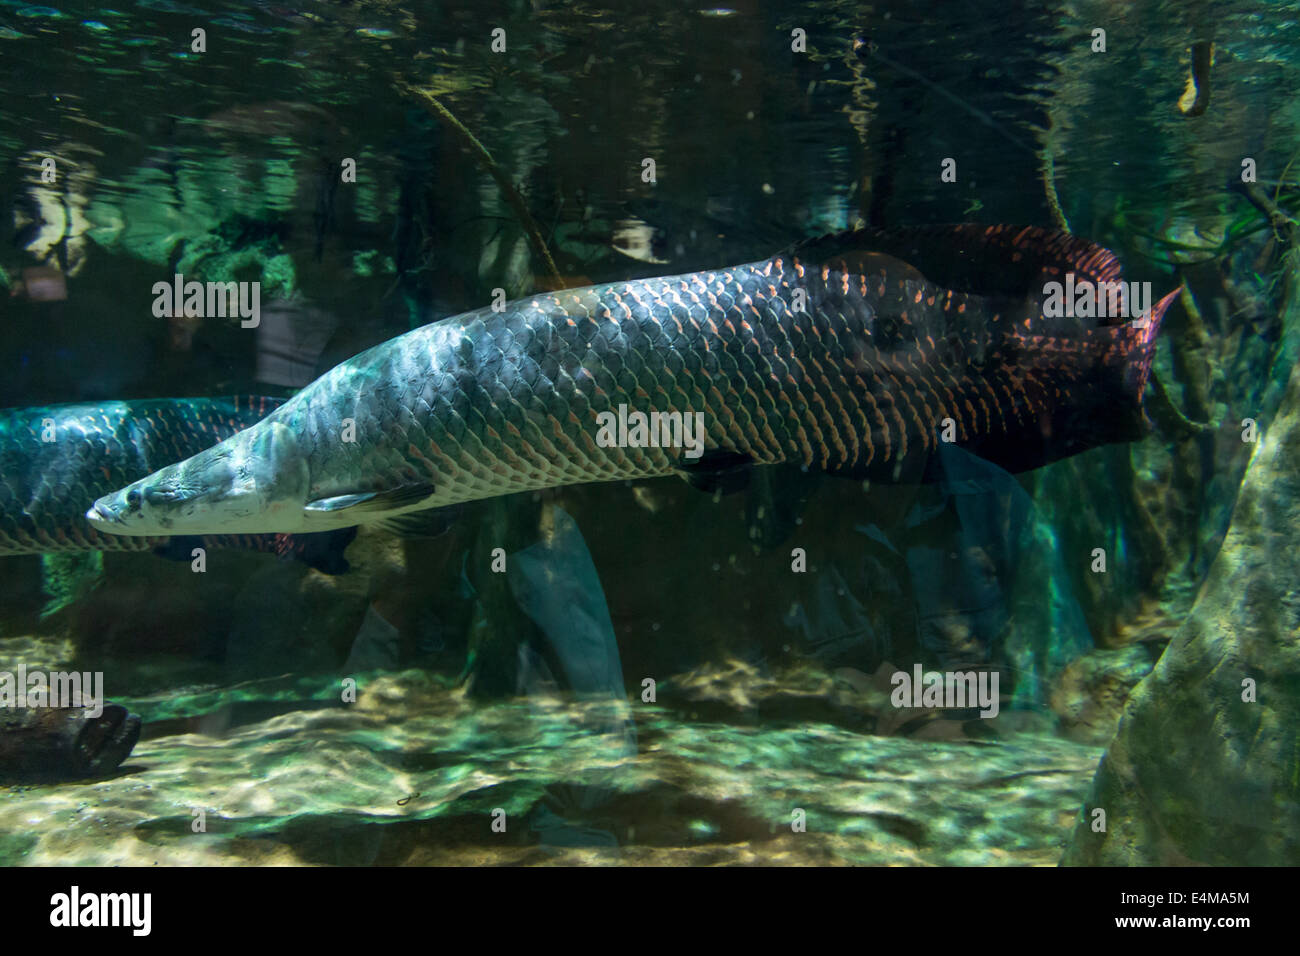 CHINA HONG KONG Ocean Park Aquarium Arapaima Fisch größte Amazon Süßwasser  Fische Stockfotografie - Alamy